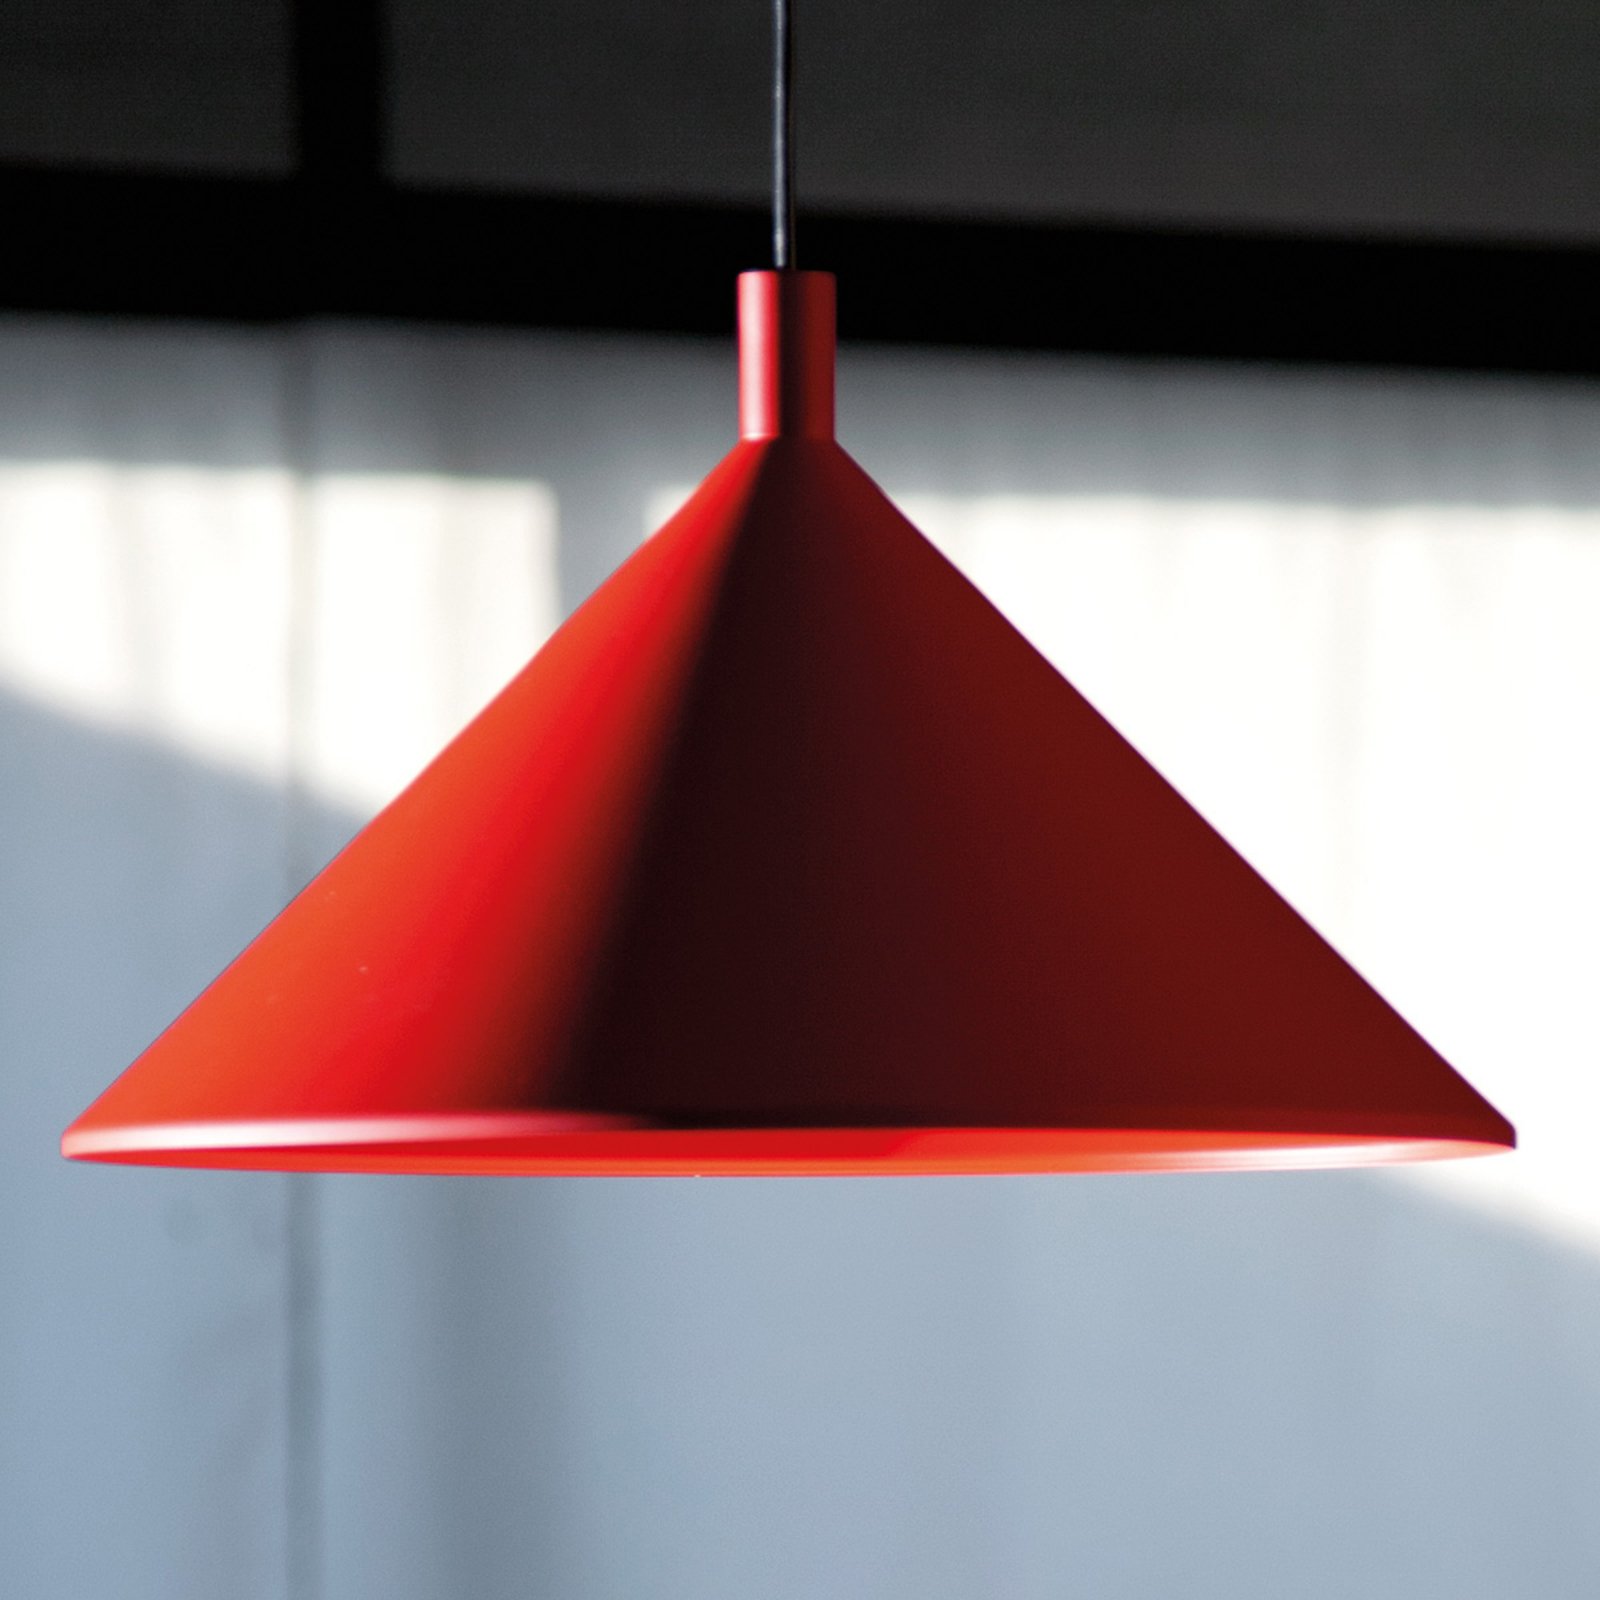 Martinelli Luce Cono lámpara colgante rojo Ø30cm